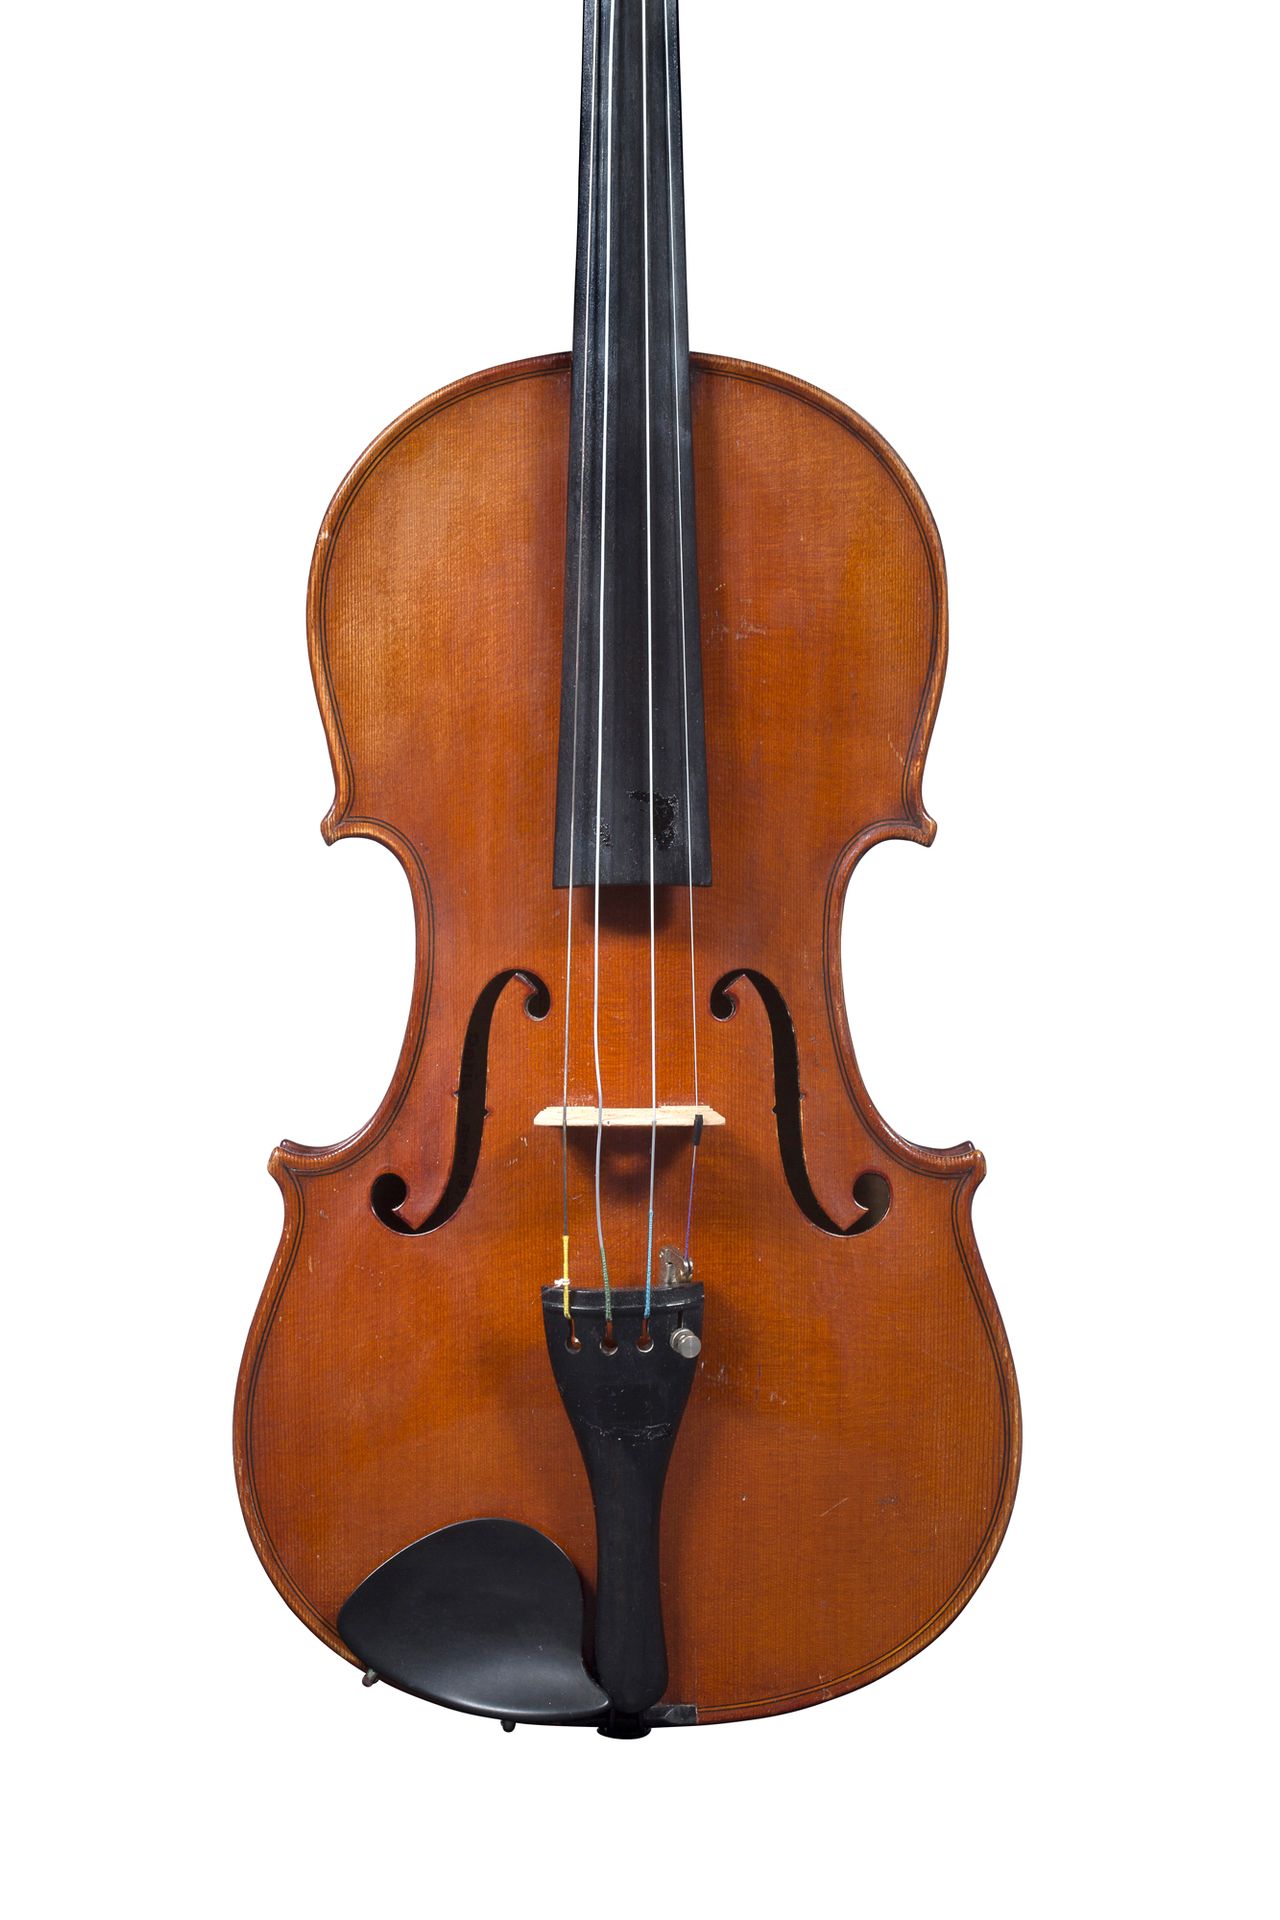 Null French violin work around 1900-10
Label Charotte-Millot 1912
Small restorat&hellip;